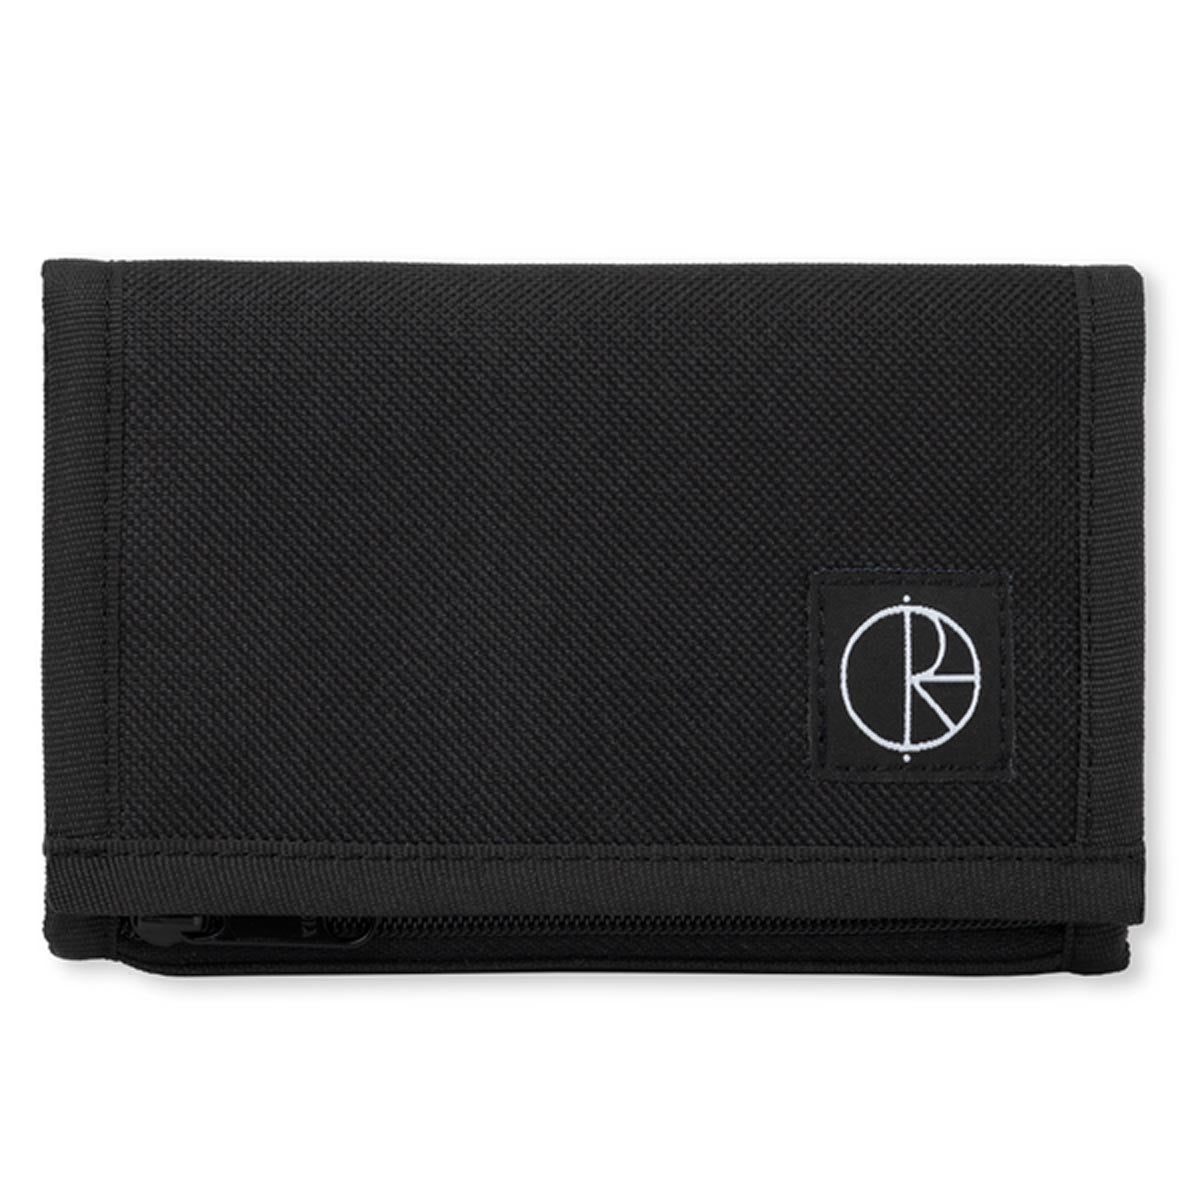 Polar Key Stroke Logo Wallet - Black image 1